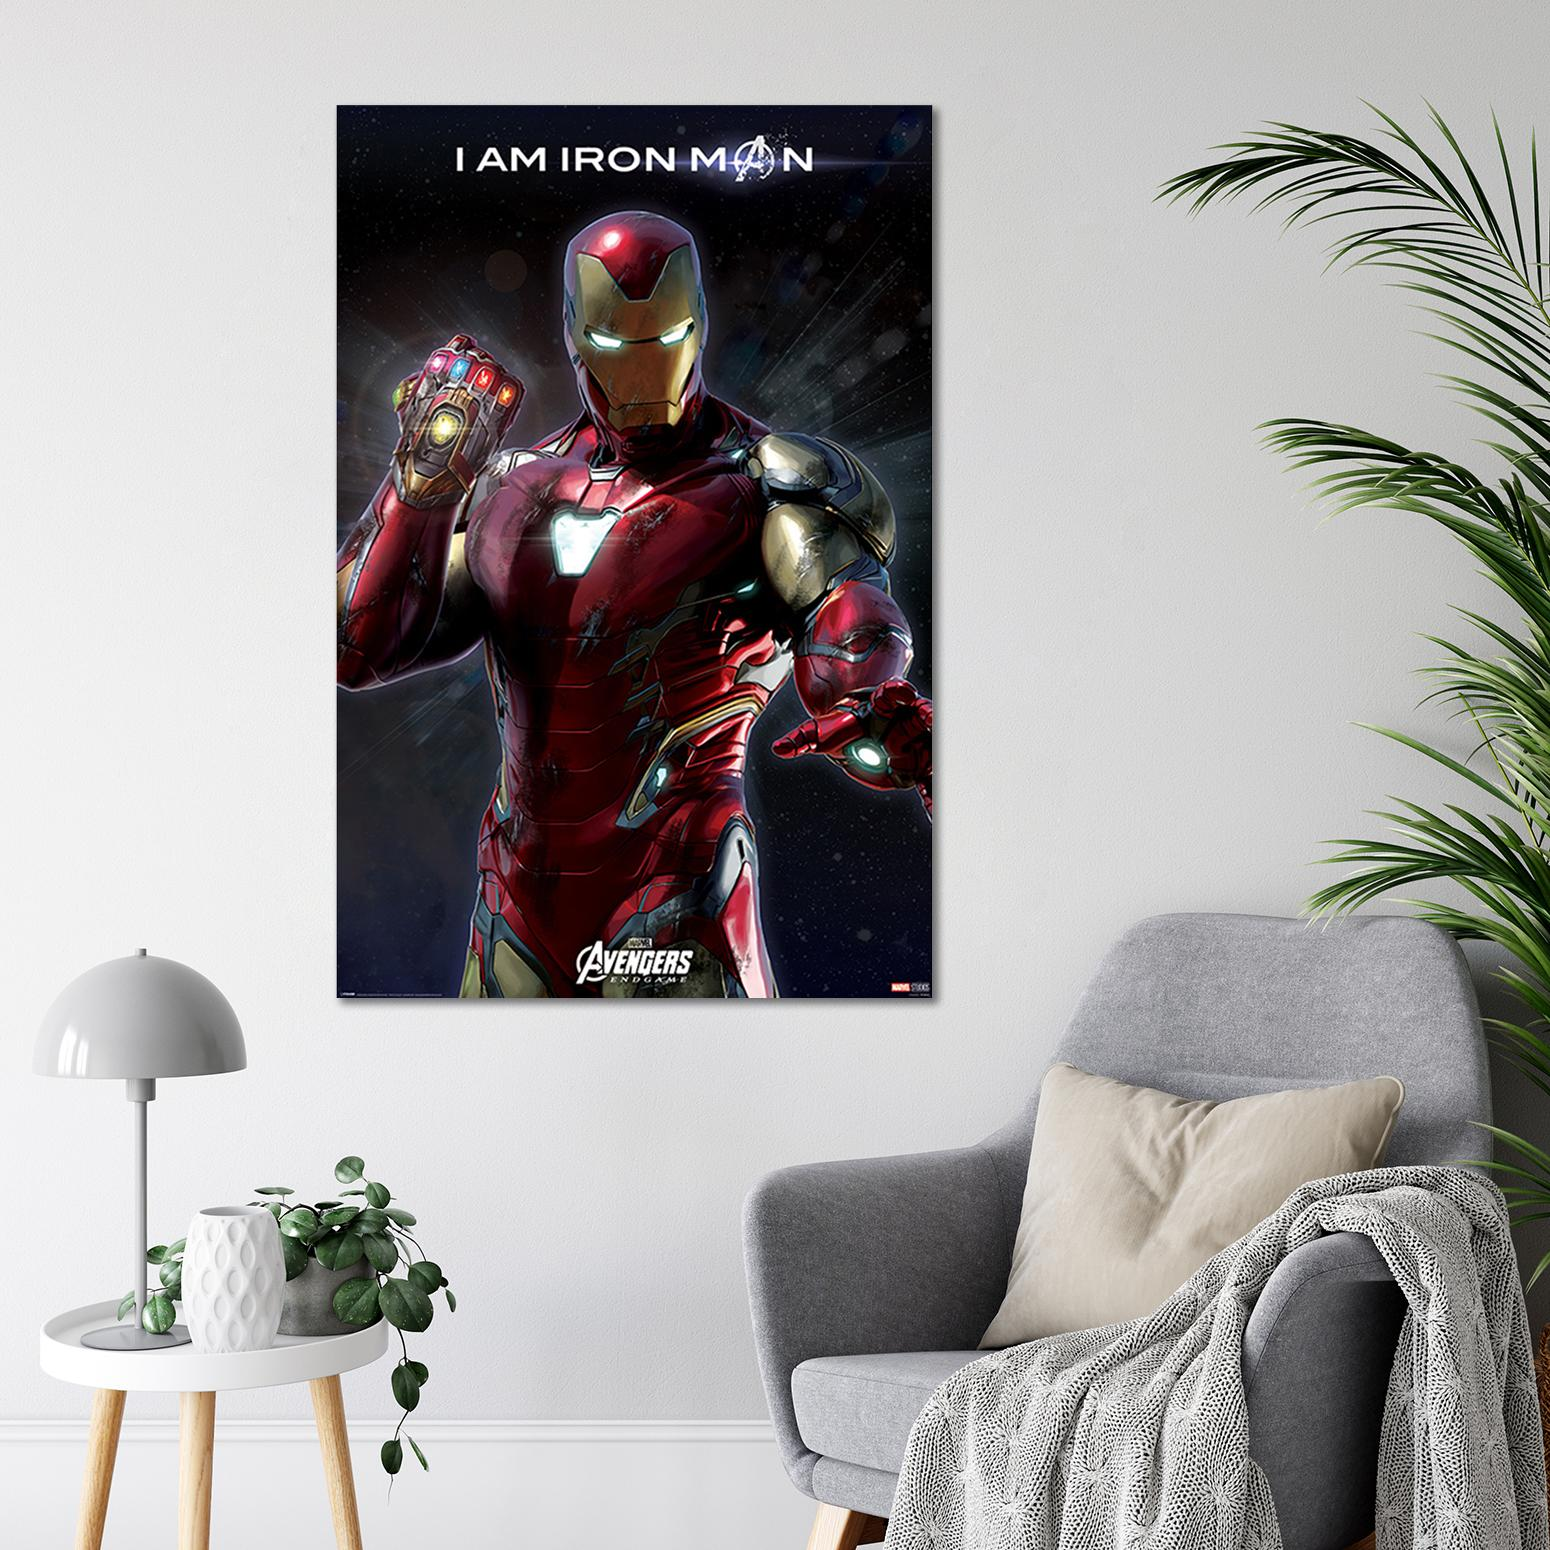 I INTERNATIONAL Man Avengers: Endgame Iron Am Poster Poster Großformatige PYRAMID